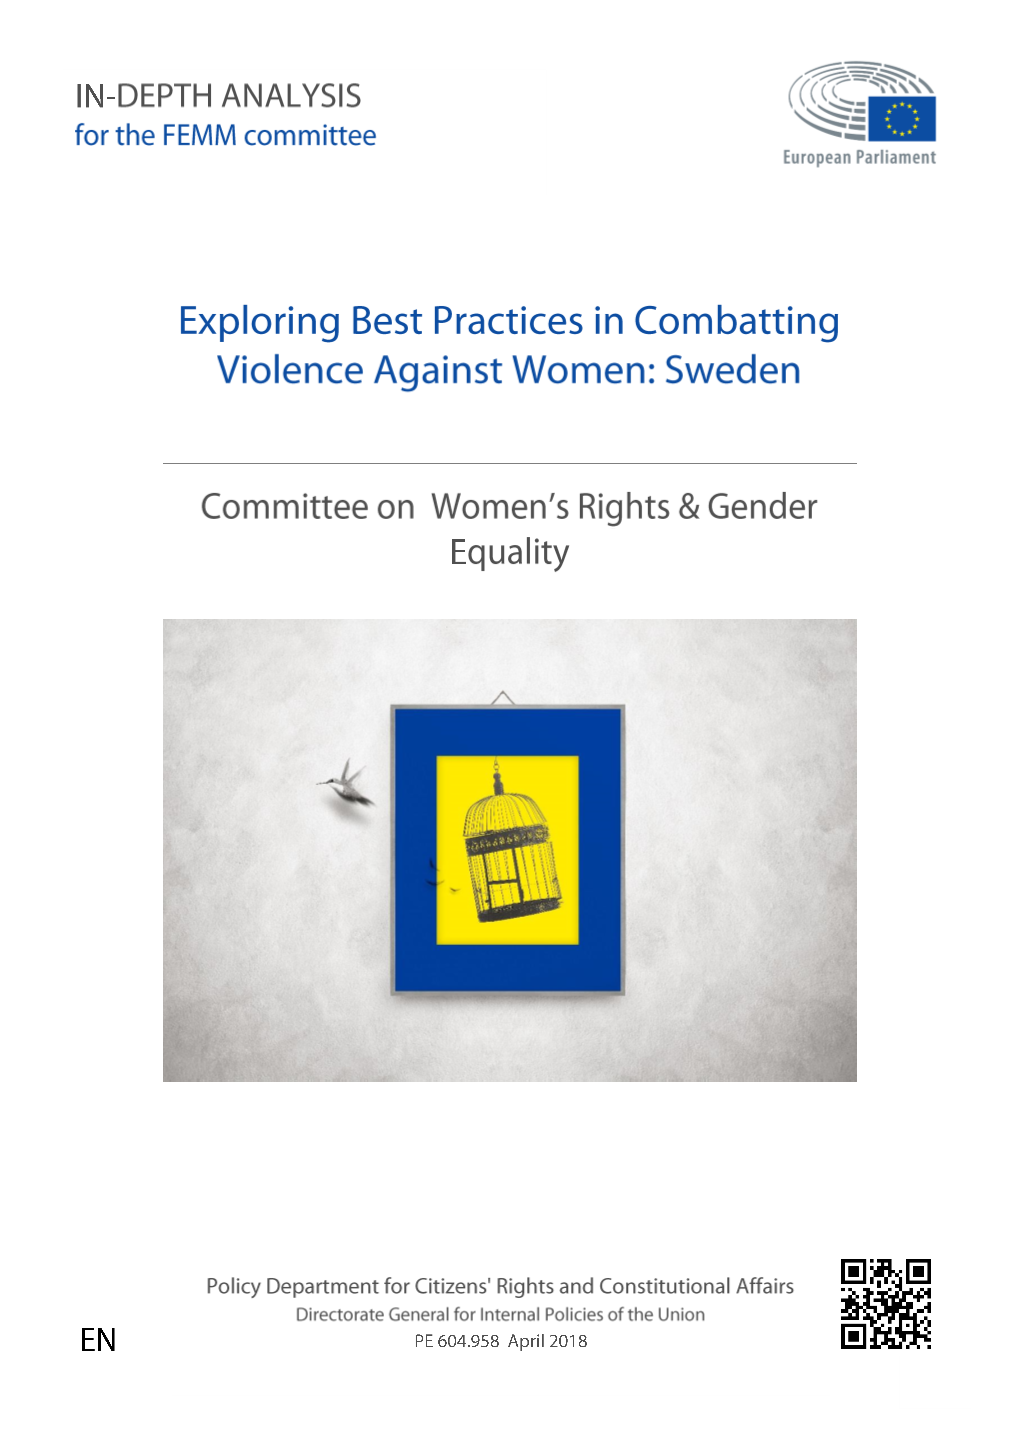 Exploring Best Practices in Combatting Violence Against Women: Sweden